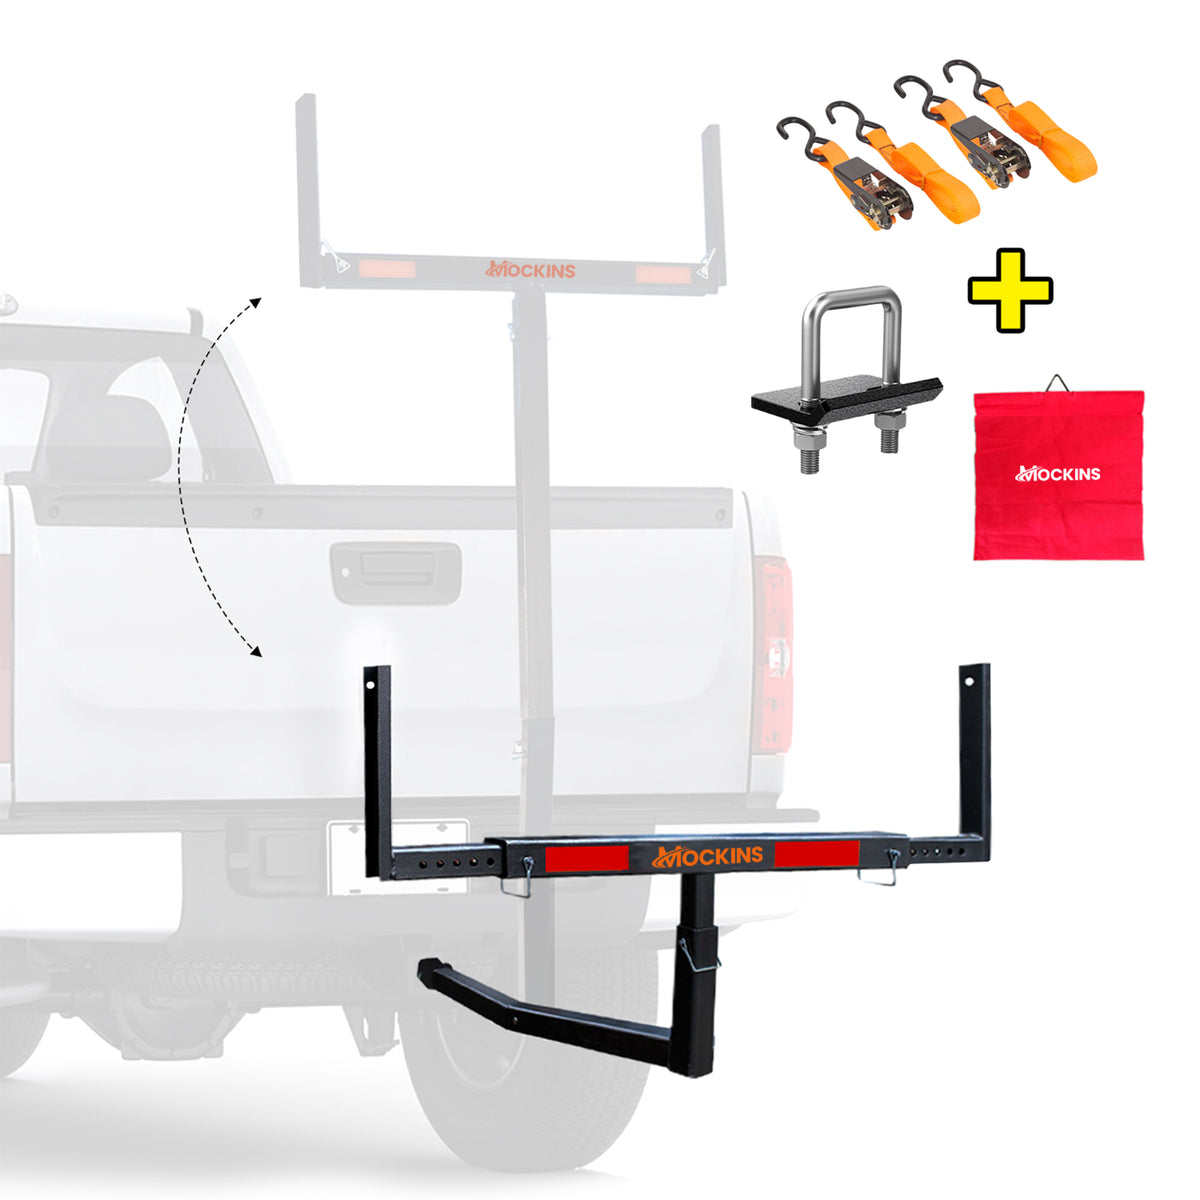 2-in-1 Design Pickup Truck Bed Extender &amp; Ratchet Straps